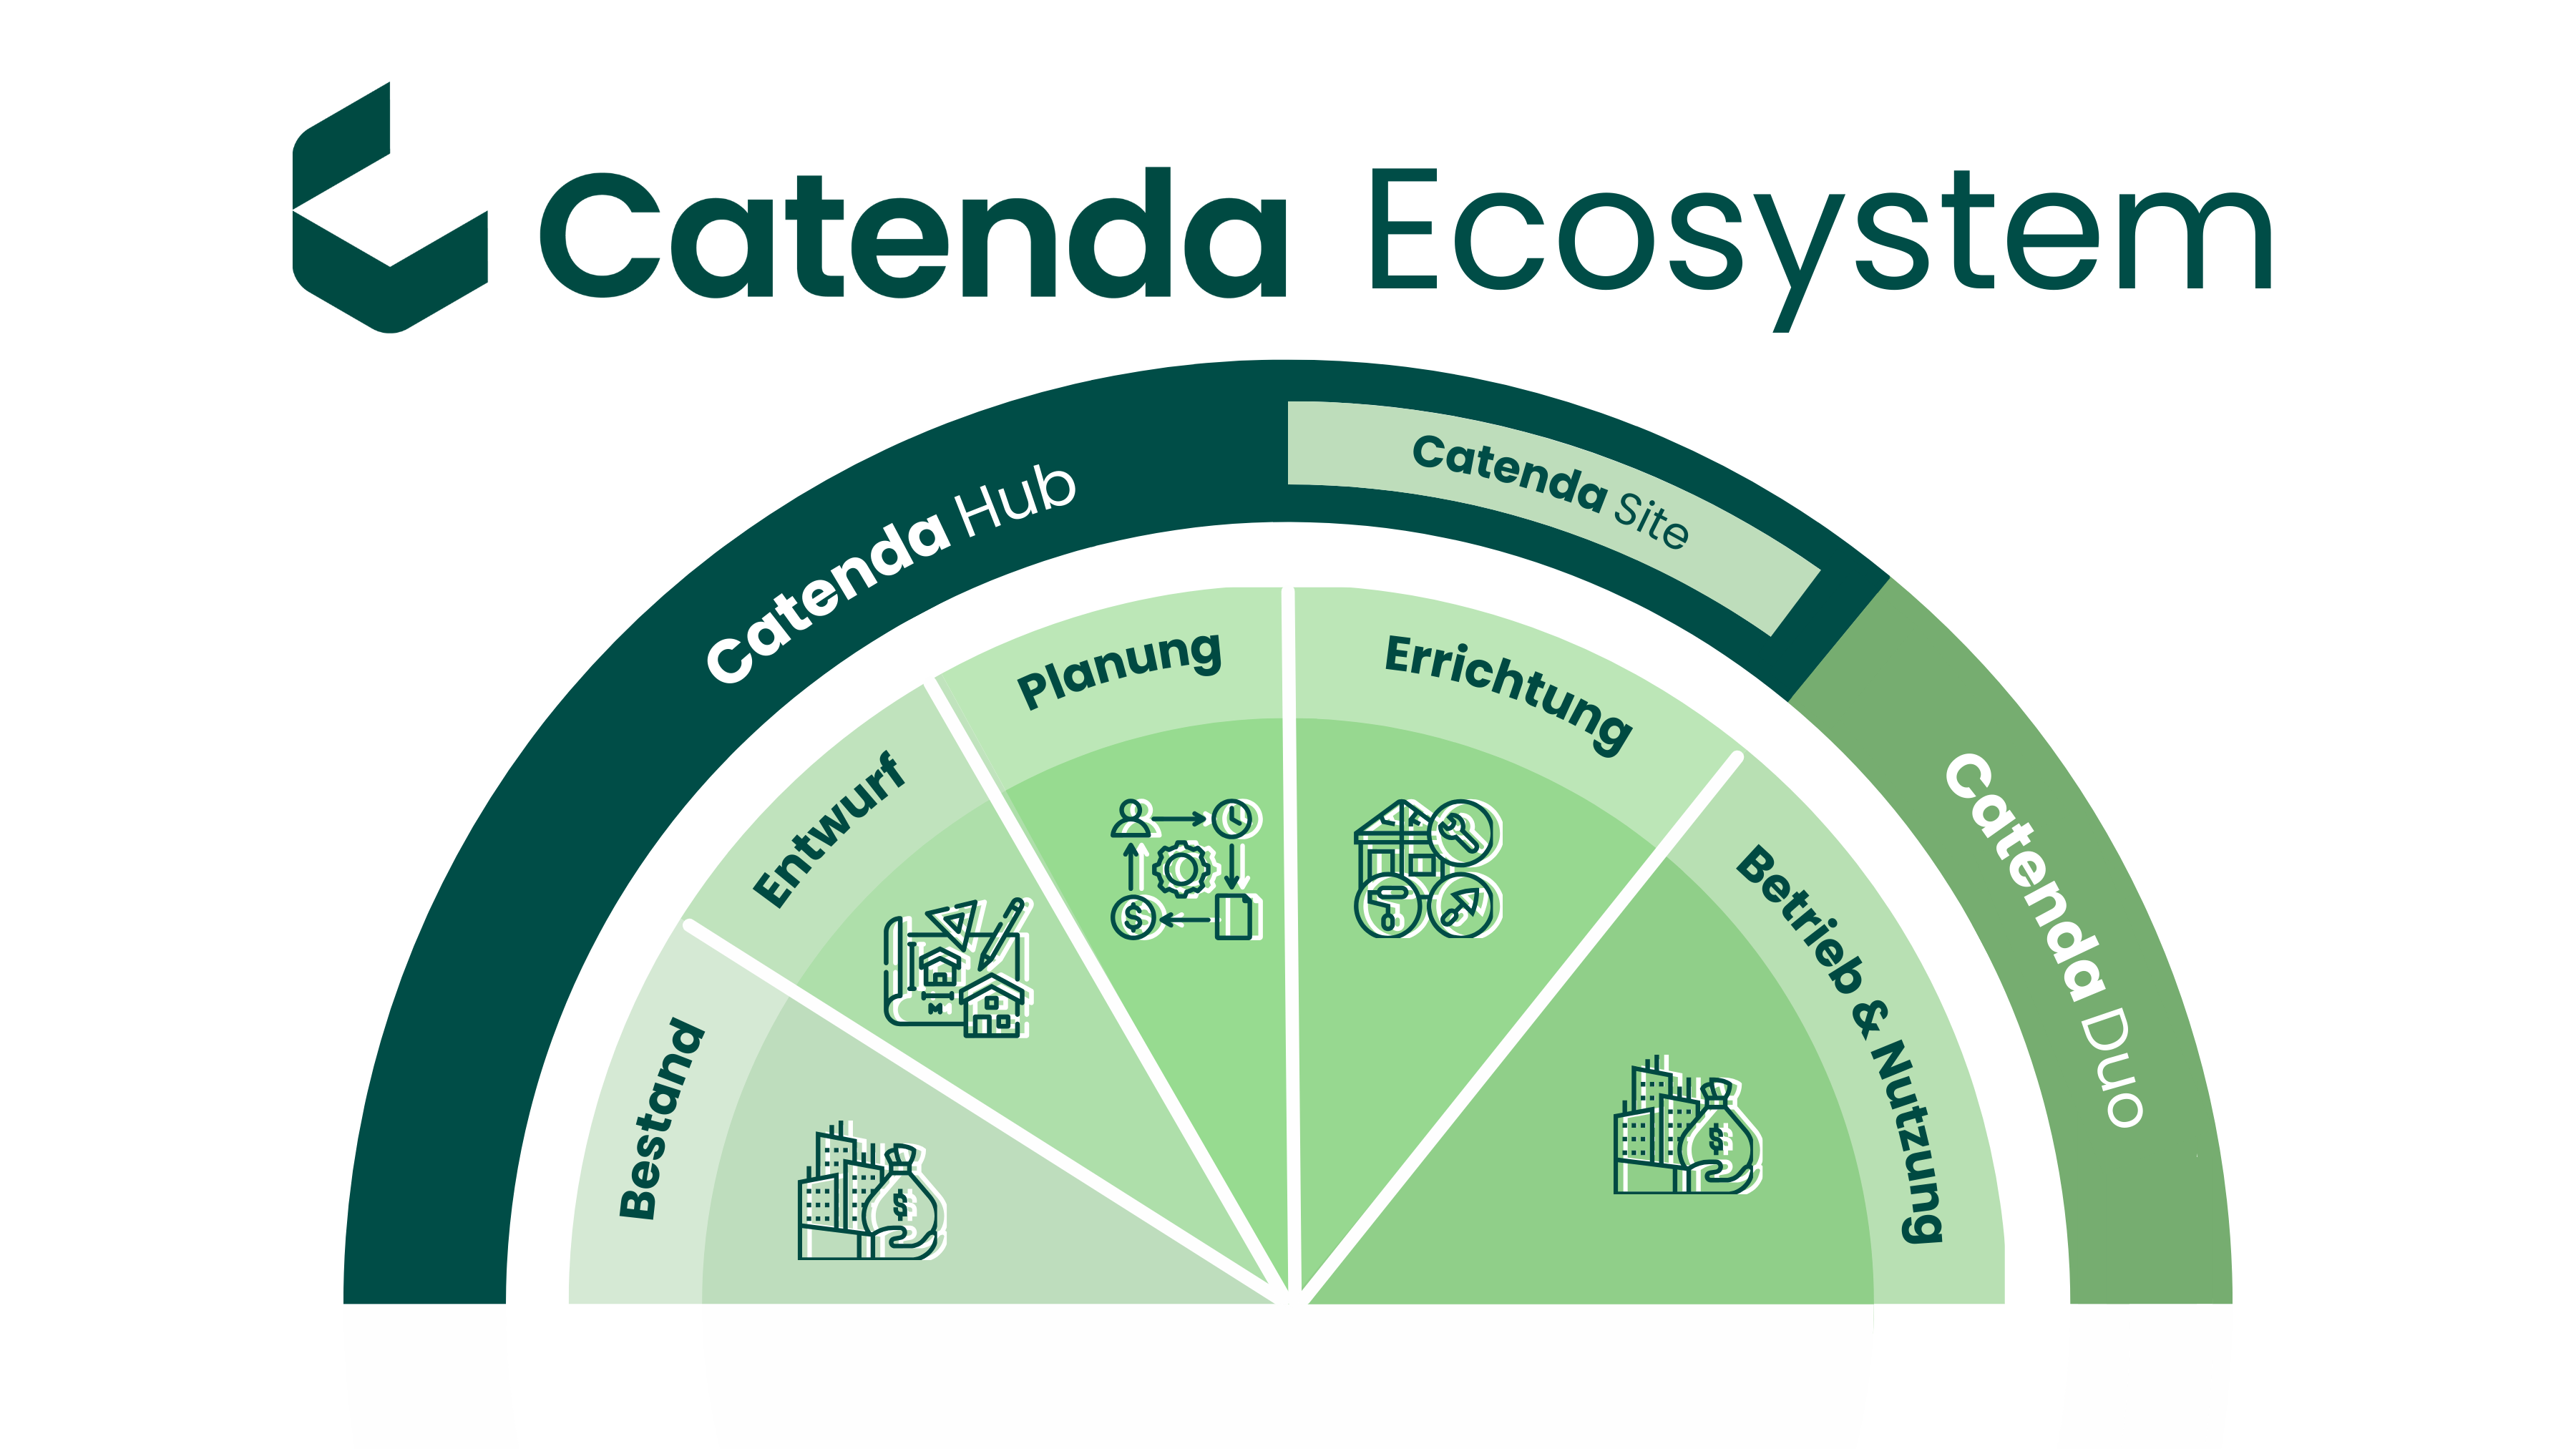 Catenda Ecosystem